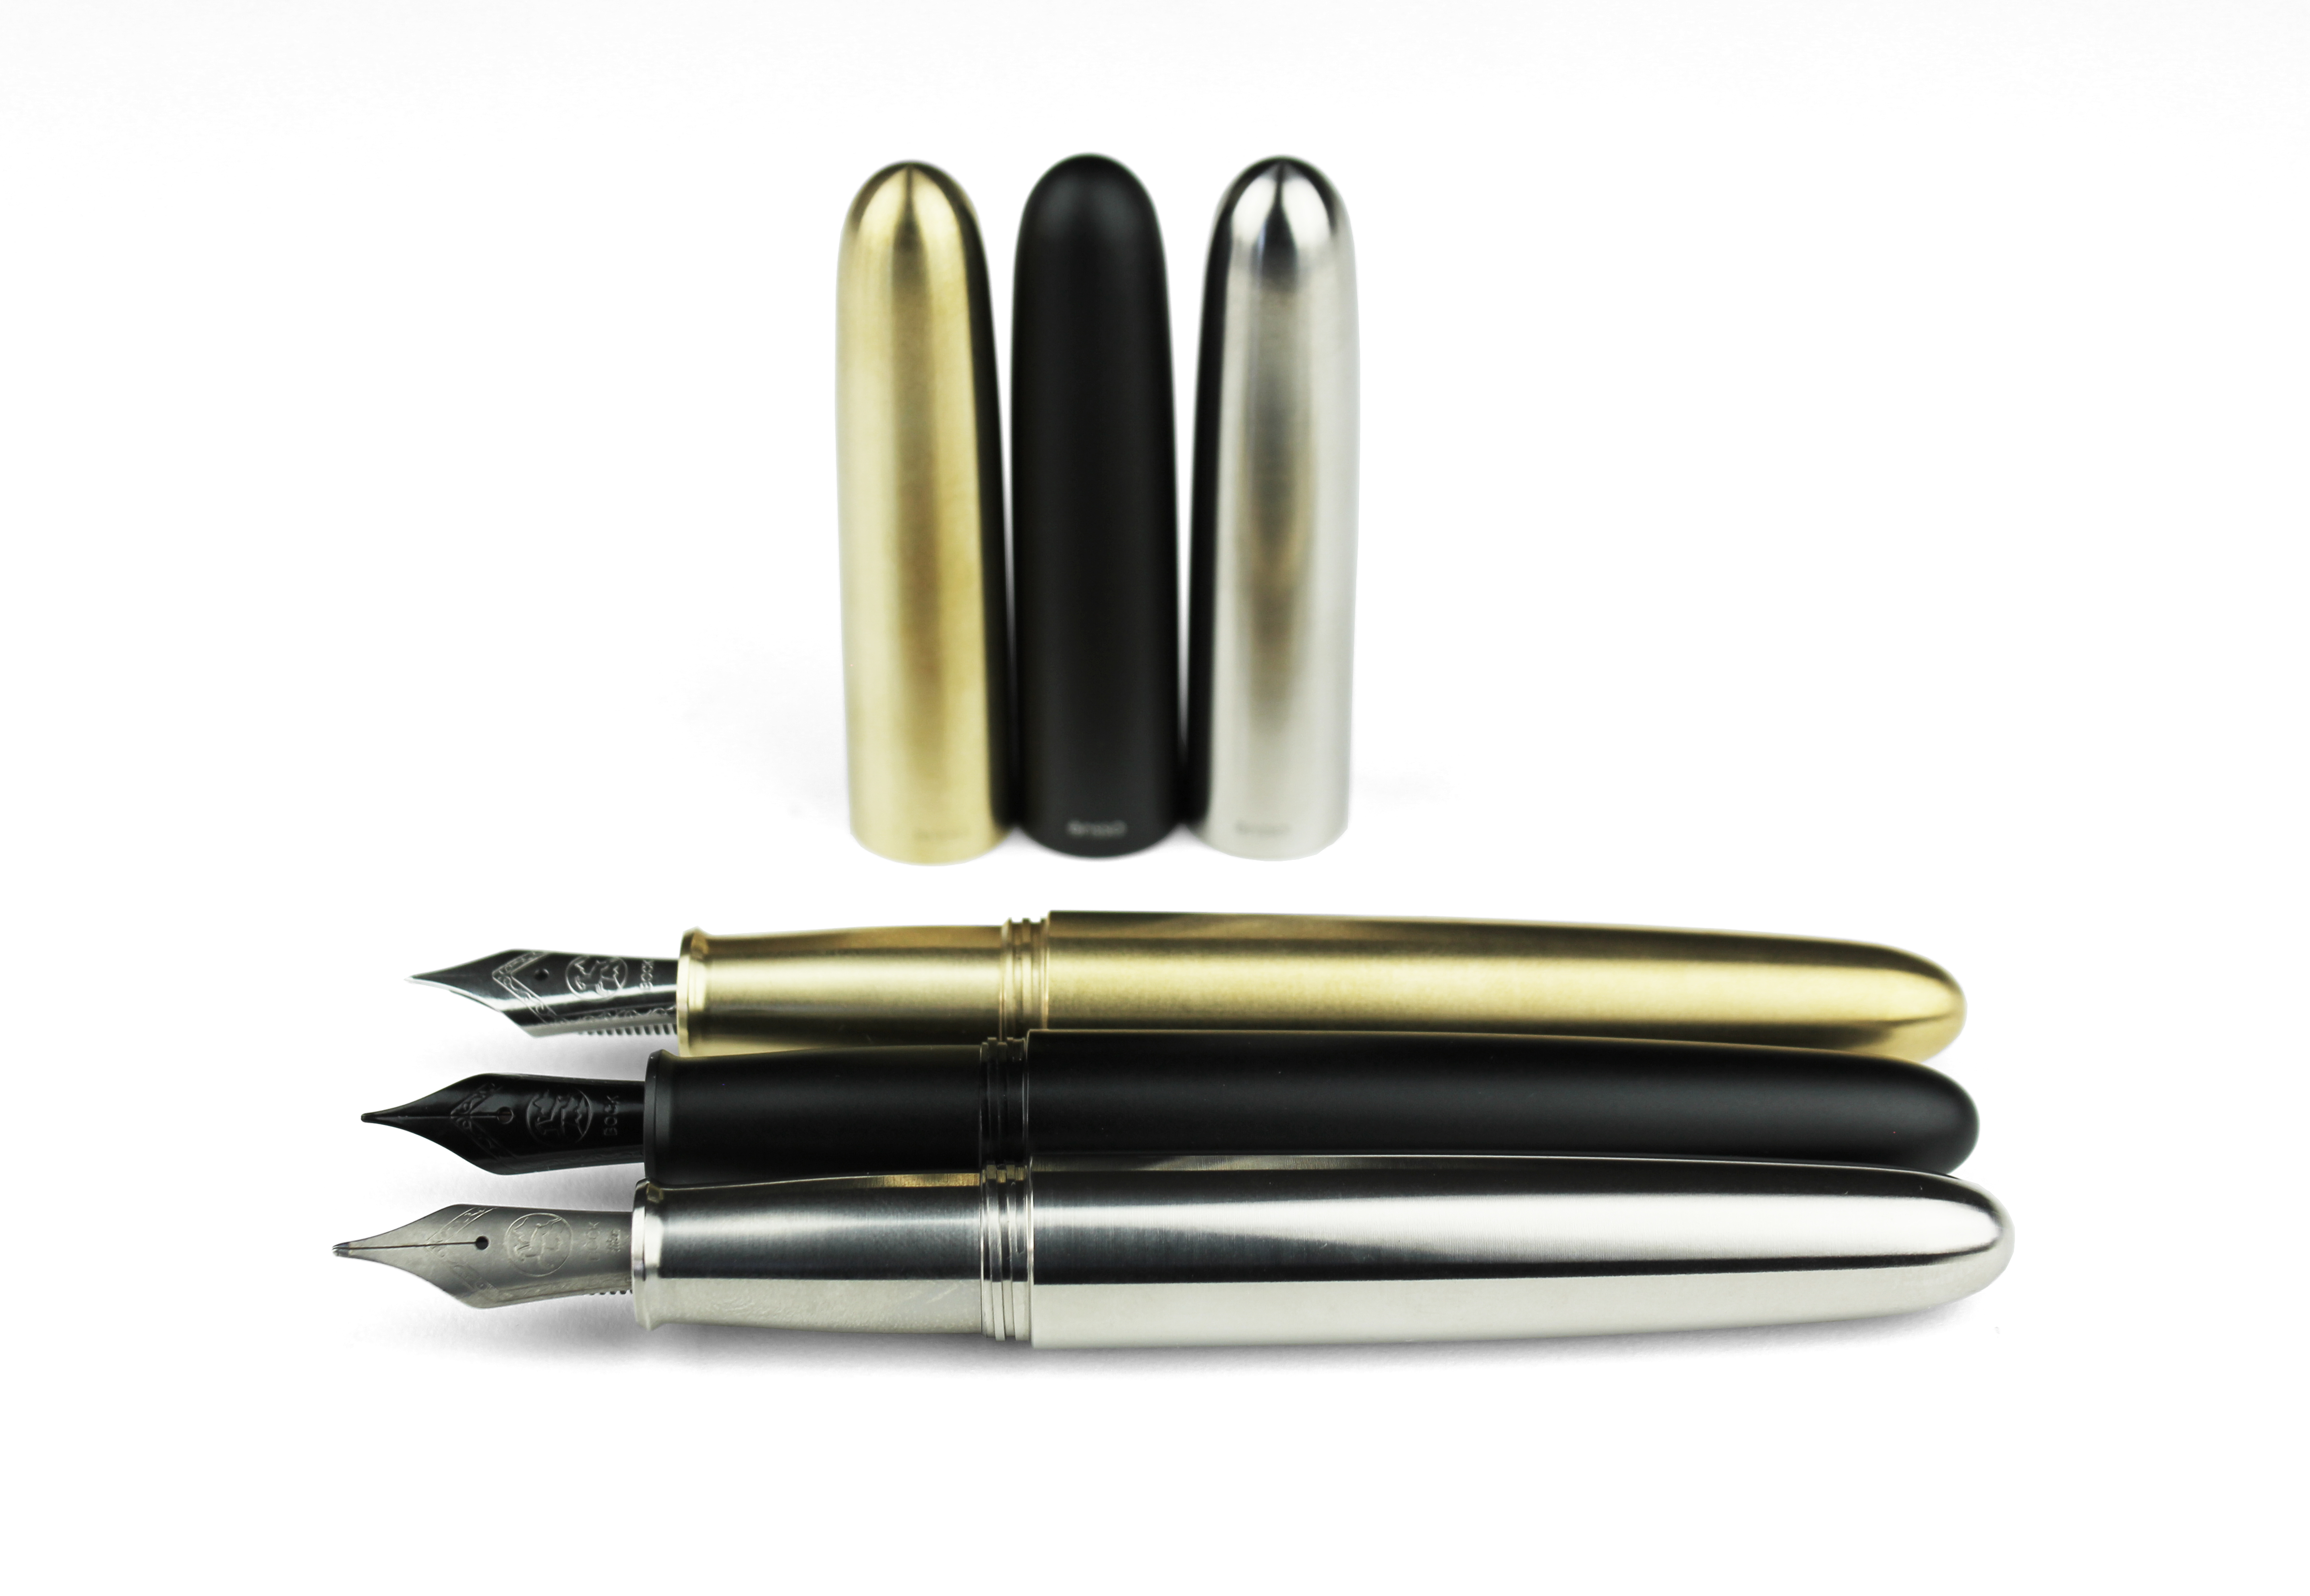 http://www.evolo.us/wp-content/uploads/2016/12/ensso-minimal-fountain-pen-titanium-brass-black-2.jpg